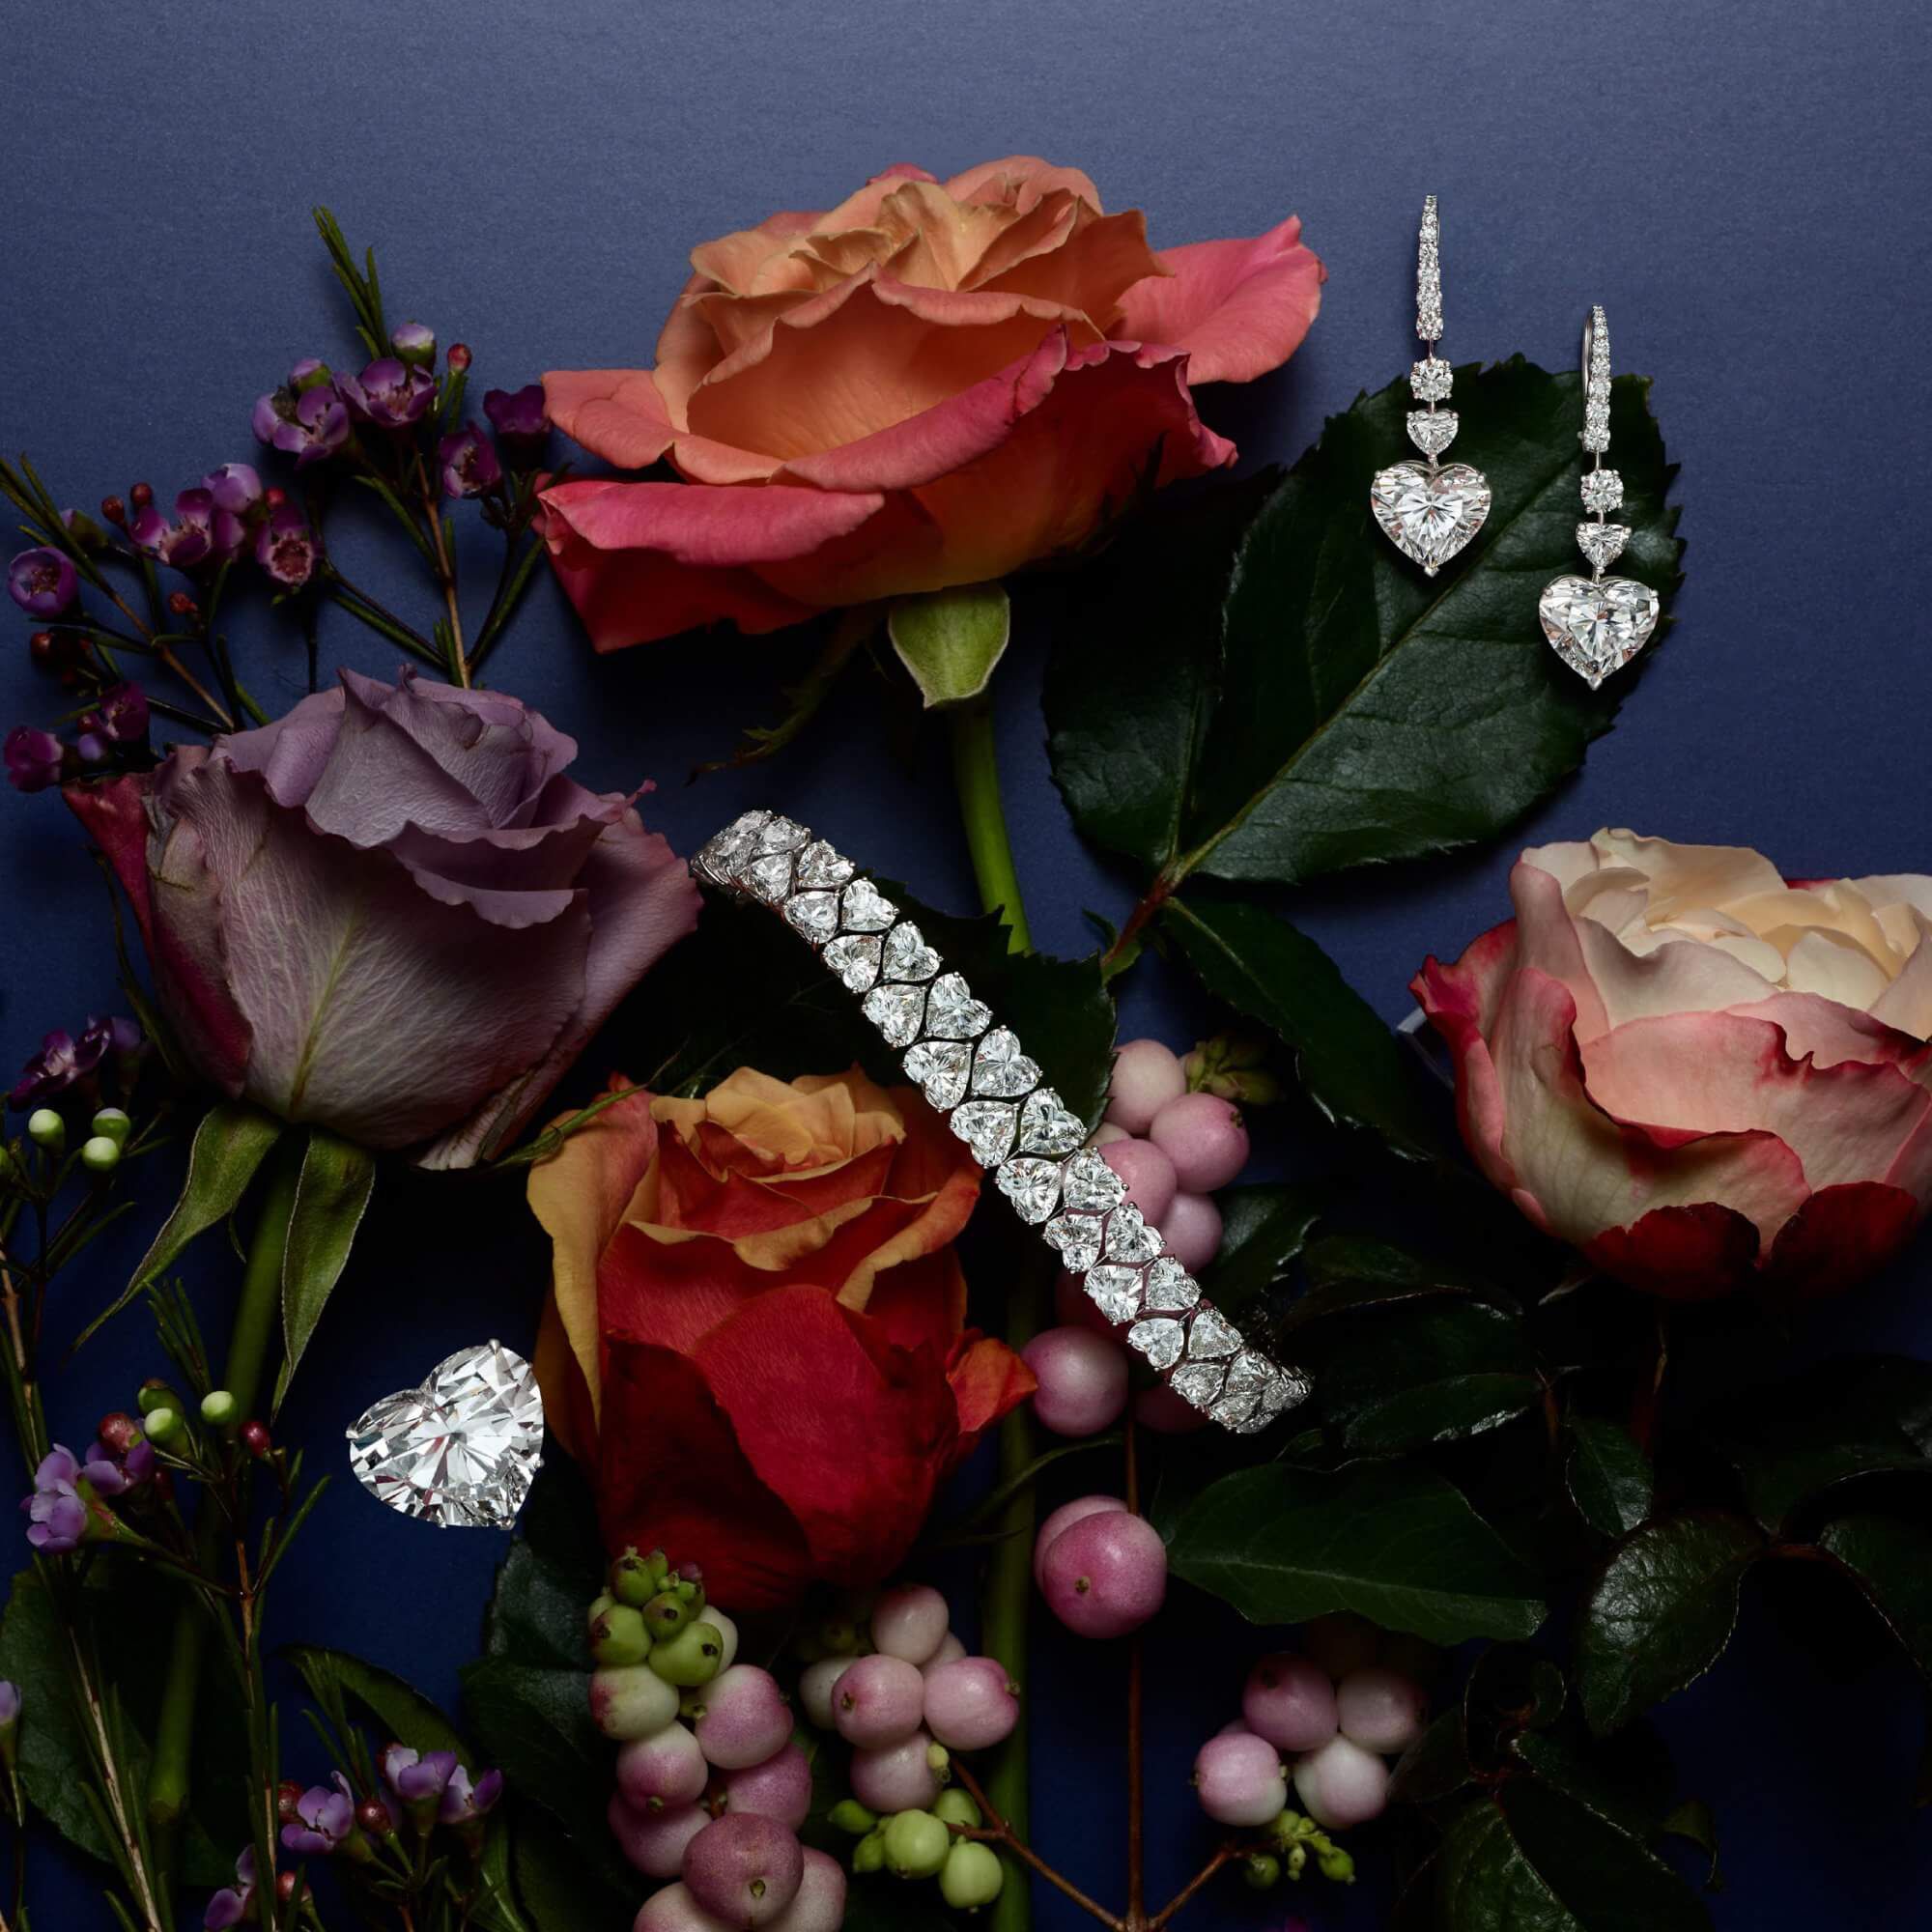 Graff diamond jewellery with flowers decorations